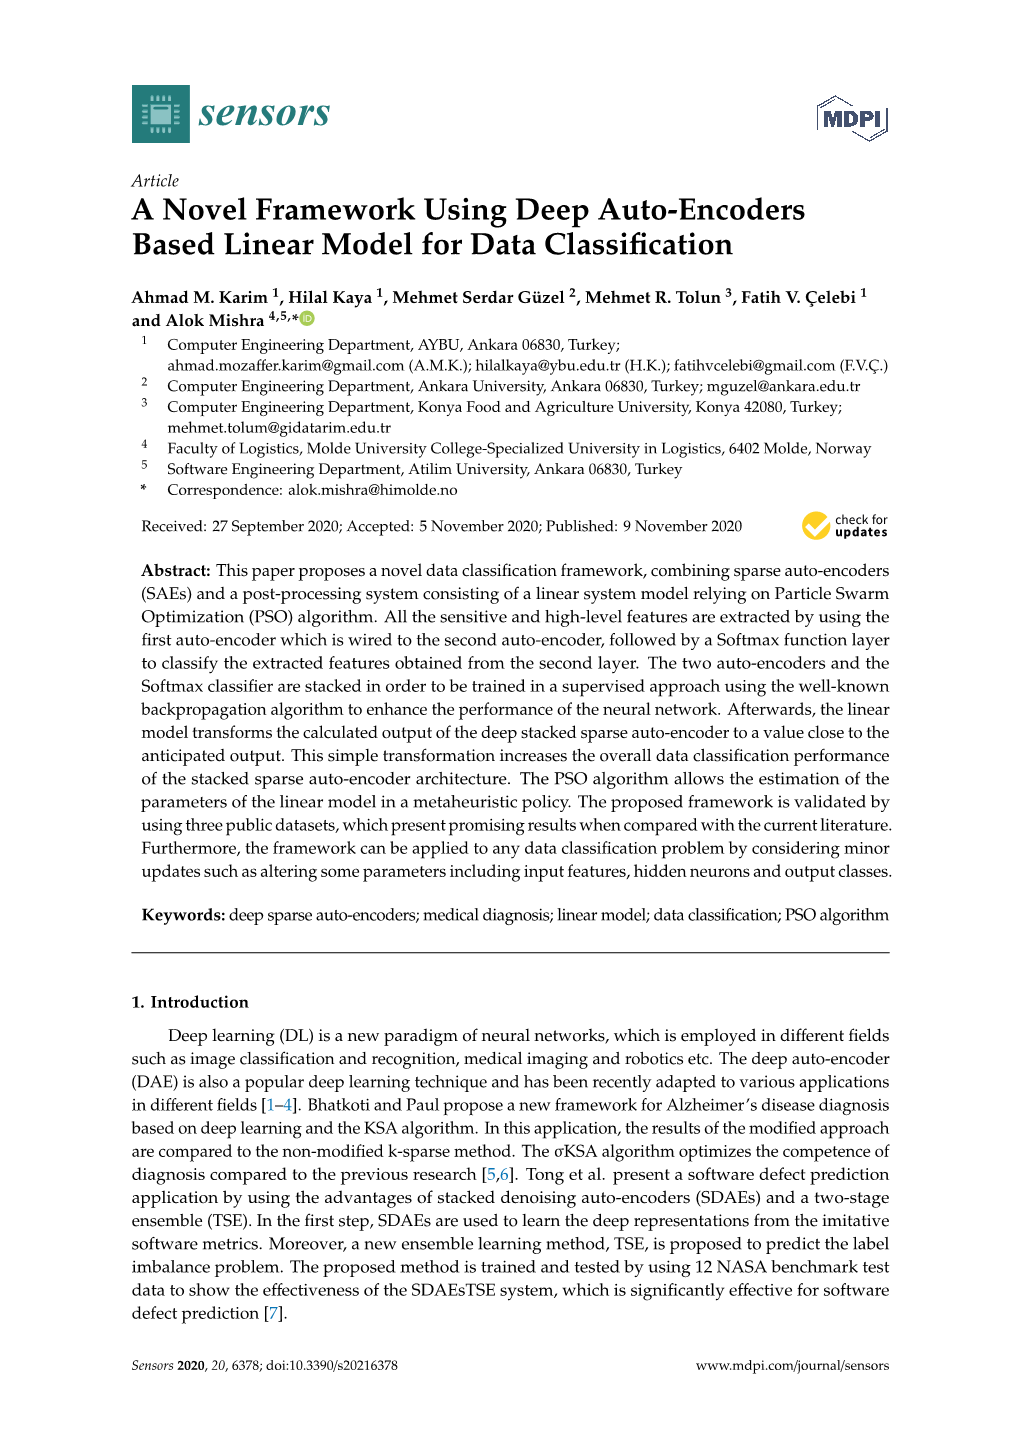 A Novel Framework Using Deep Auto-Encoders Based Linear Model for Data Classiﬁcation